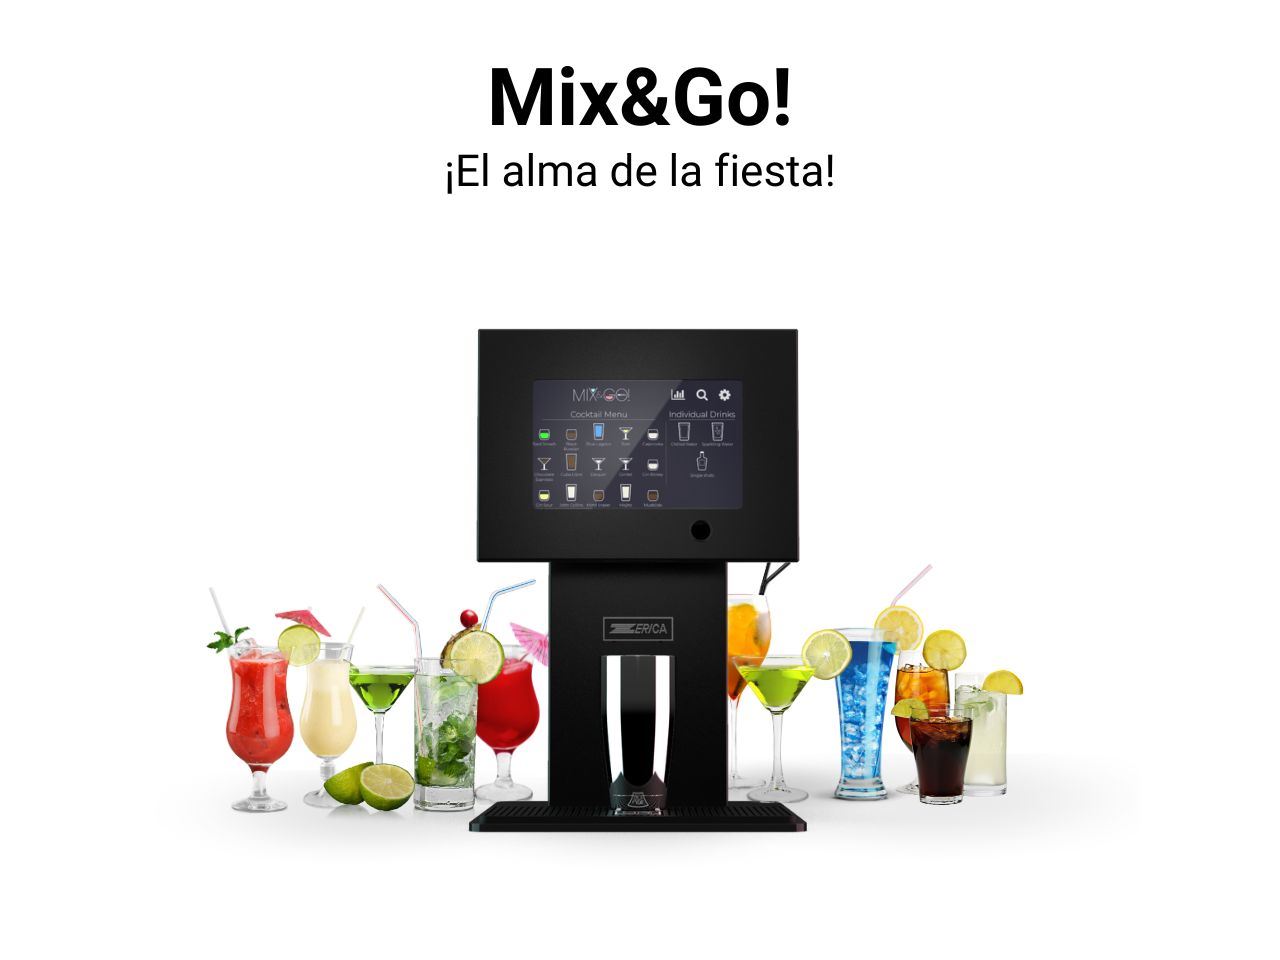 Mix&Go!
El innovador dispensador de cócteles que permite mezclar la bebida perfecto en pocos segundos.